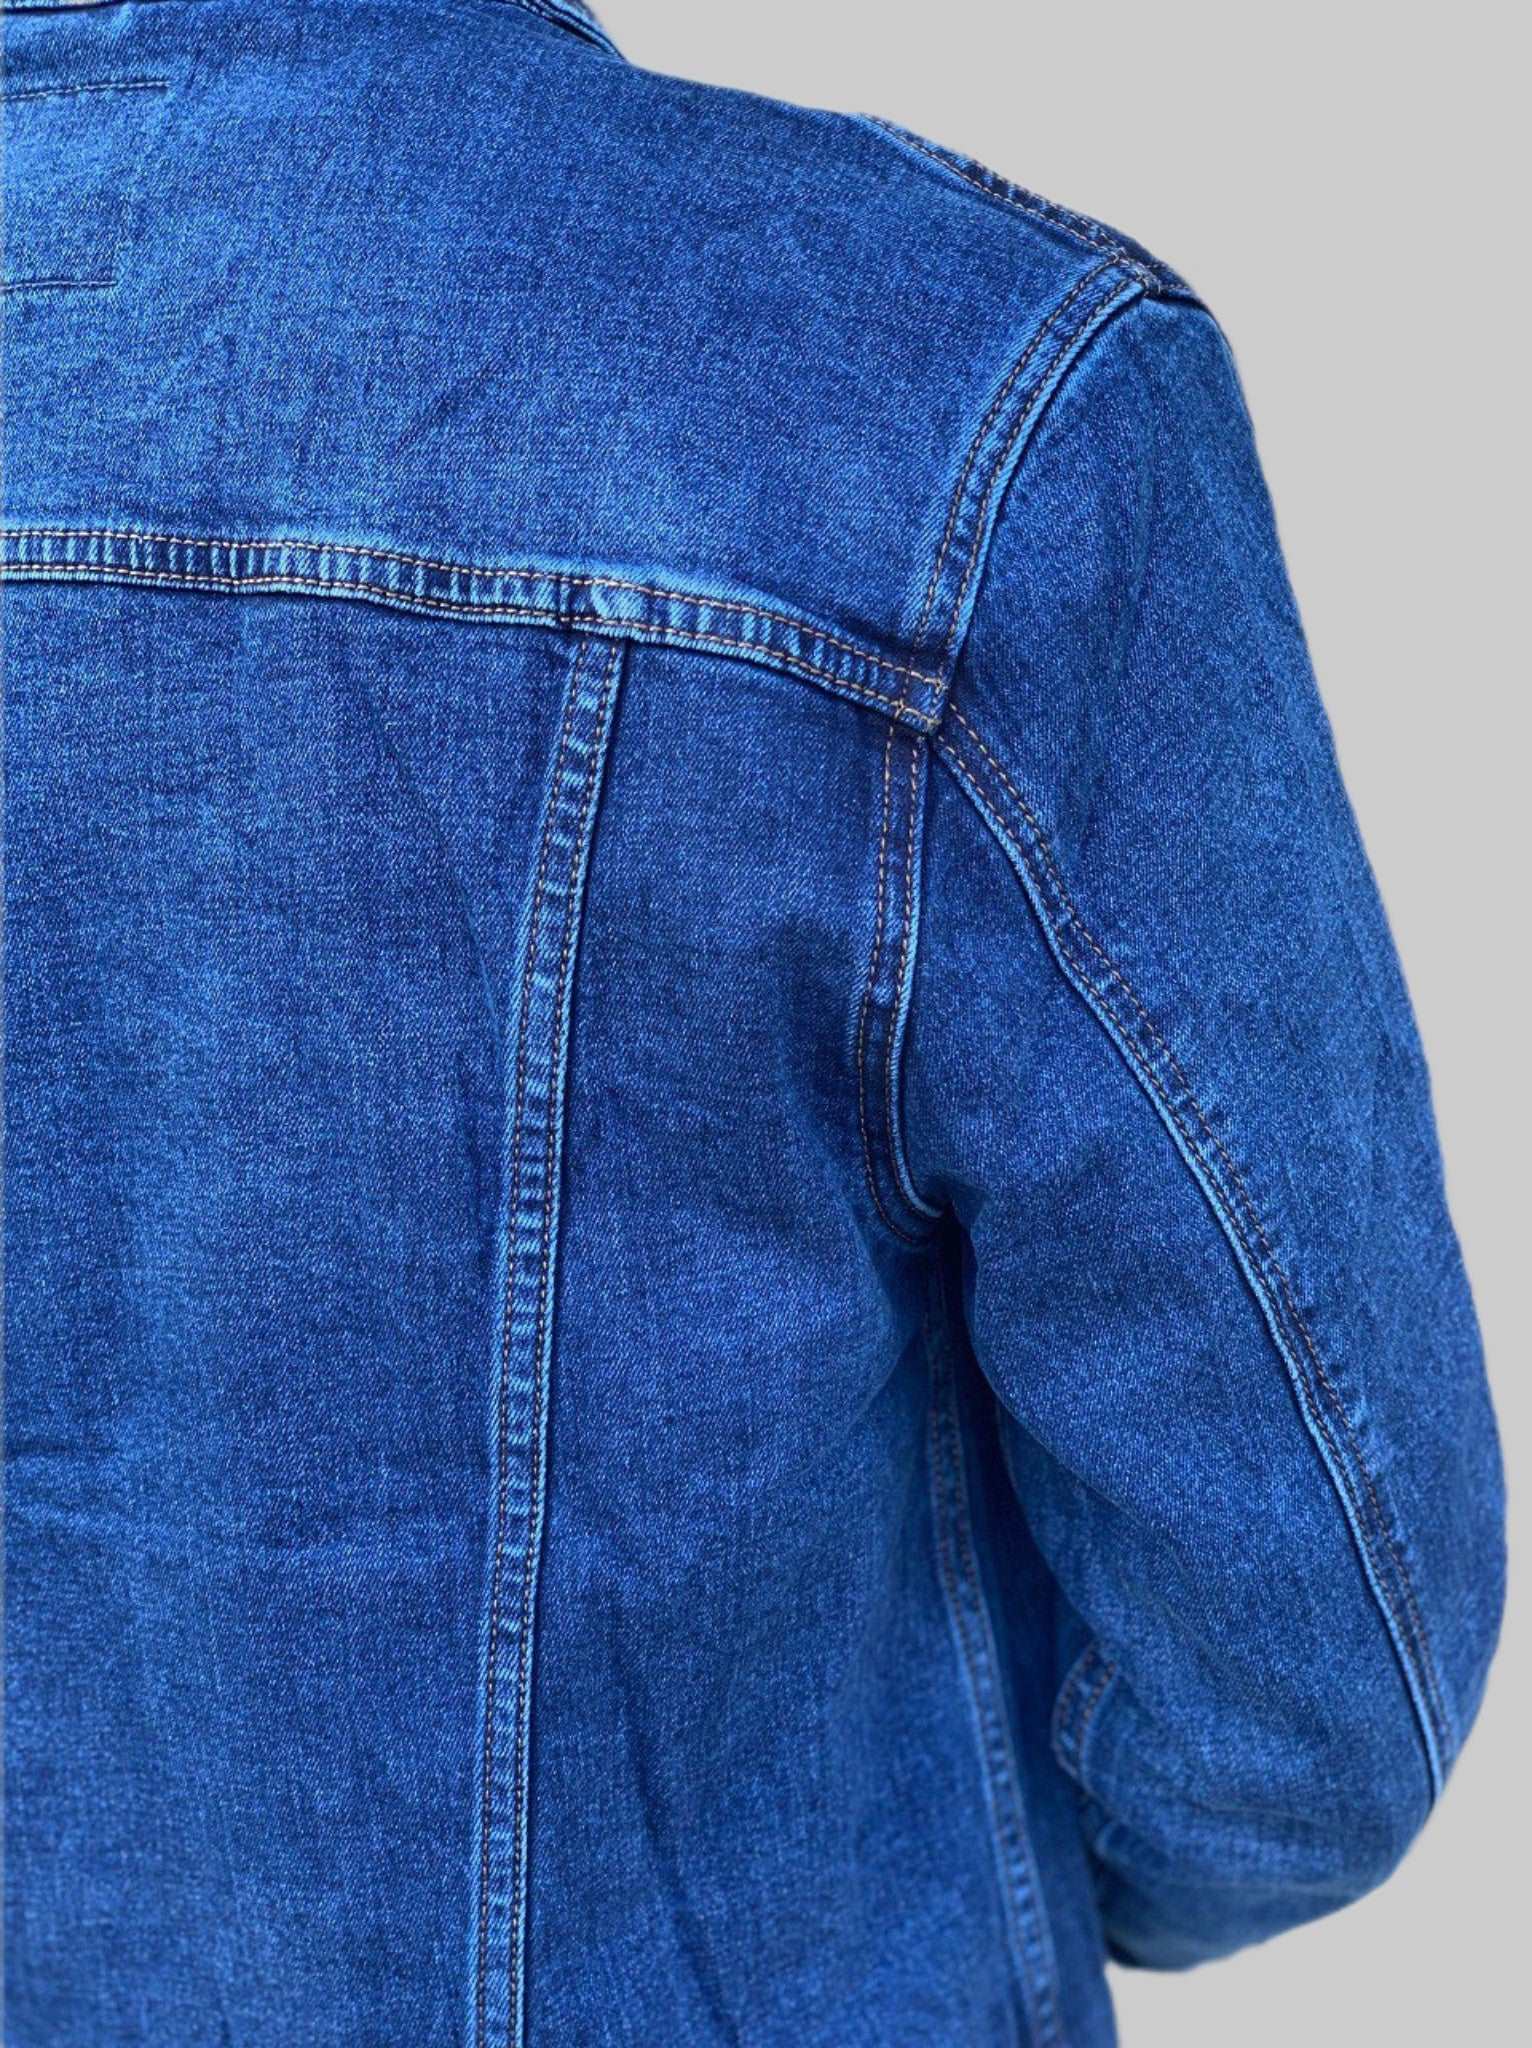 Džinsa jaka no Pagalle&jeans